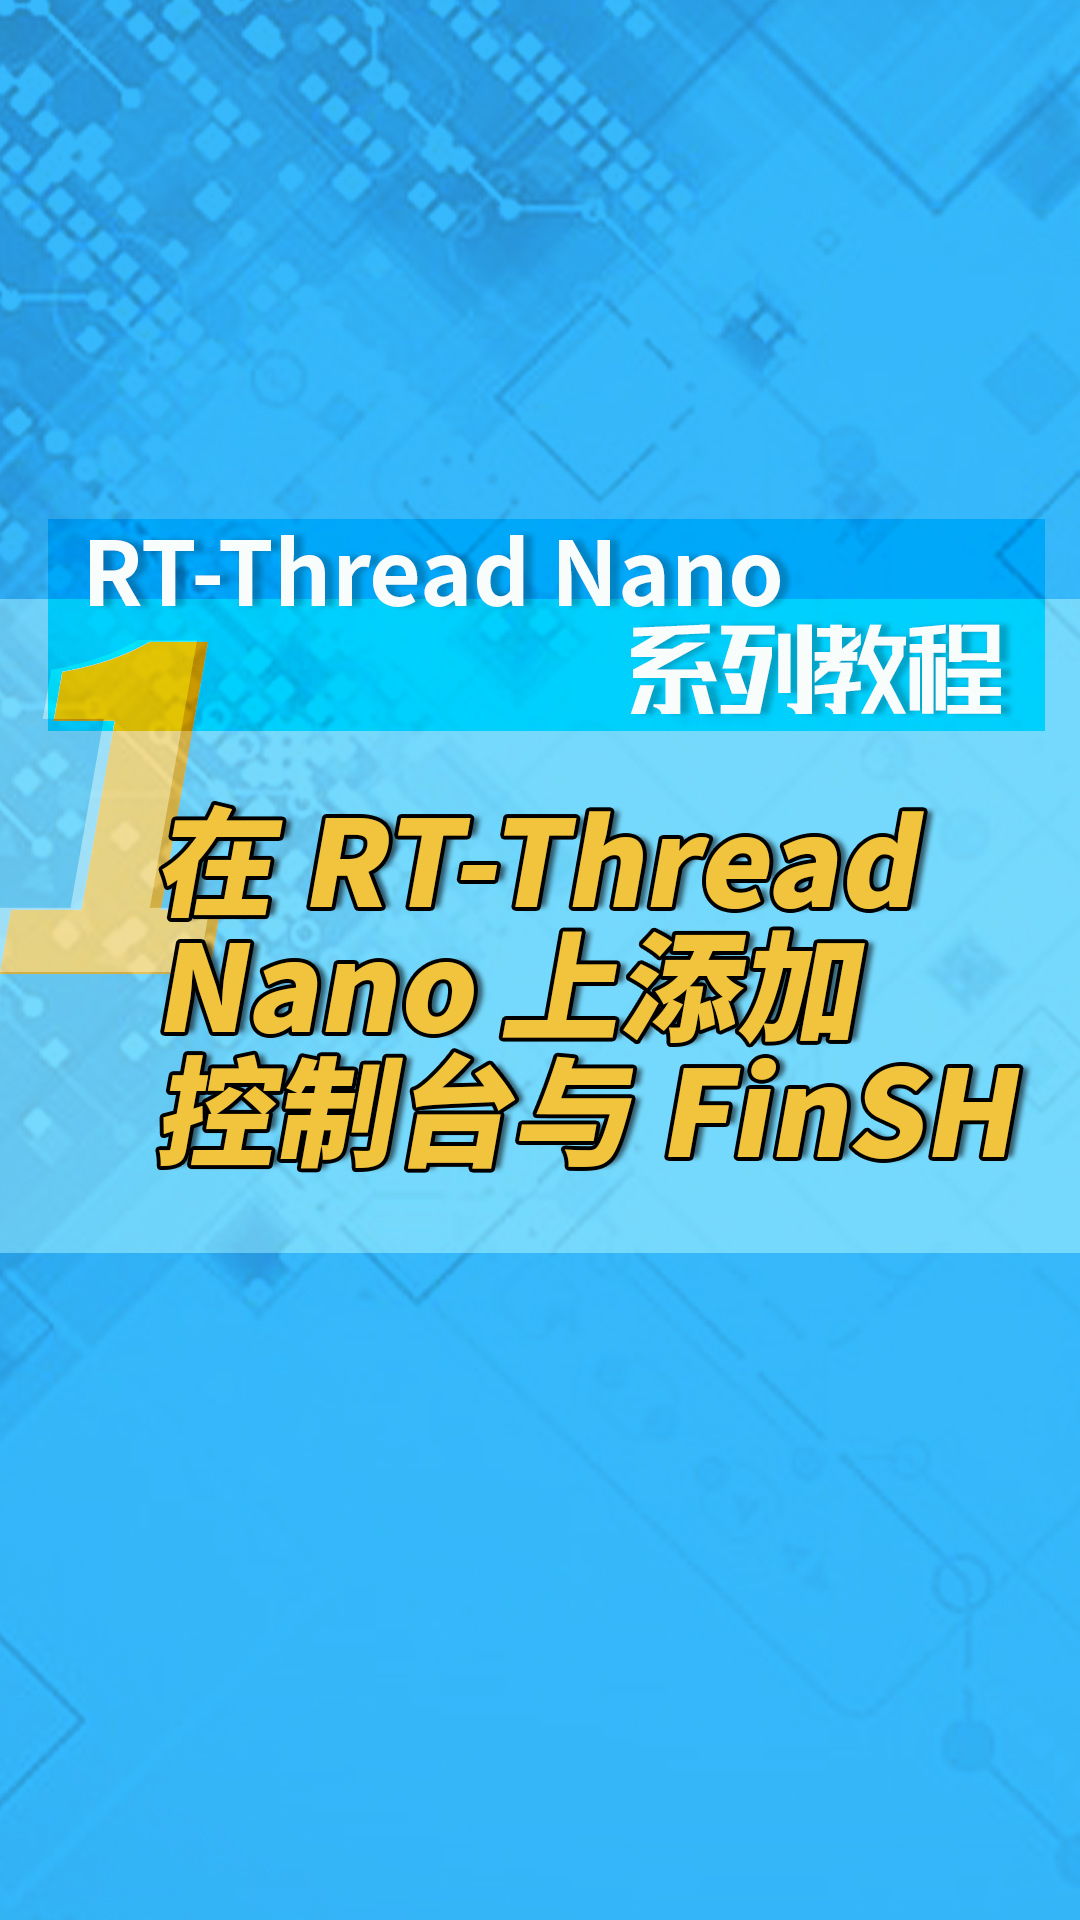 RT-Thread Nano系列教程1在 RT-Thread Nano 上添加控制台与 FinSH